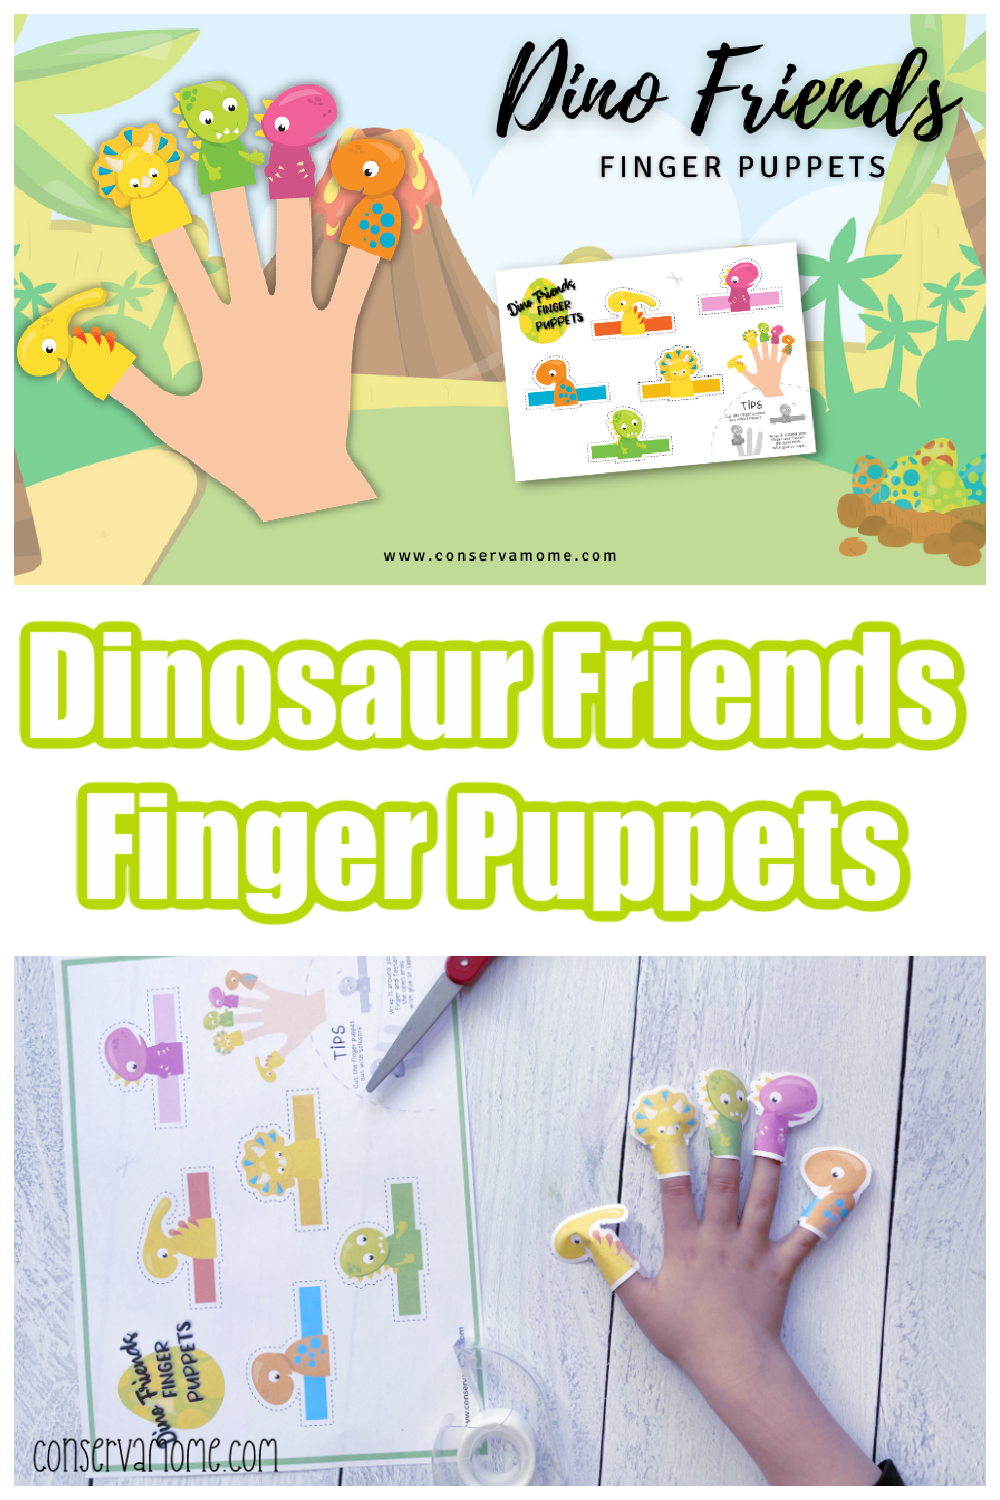 Dinosaur Friends Finger Puppets: Free printable dinosaur finger puppets